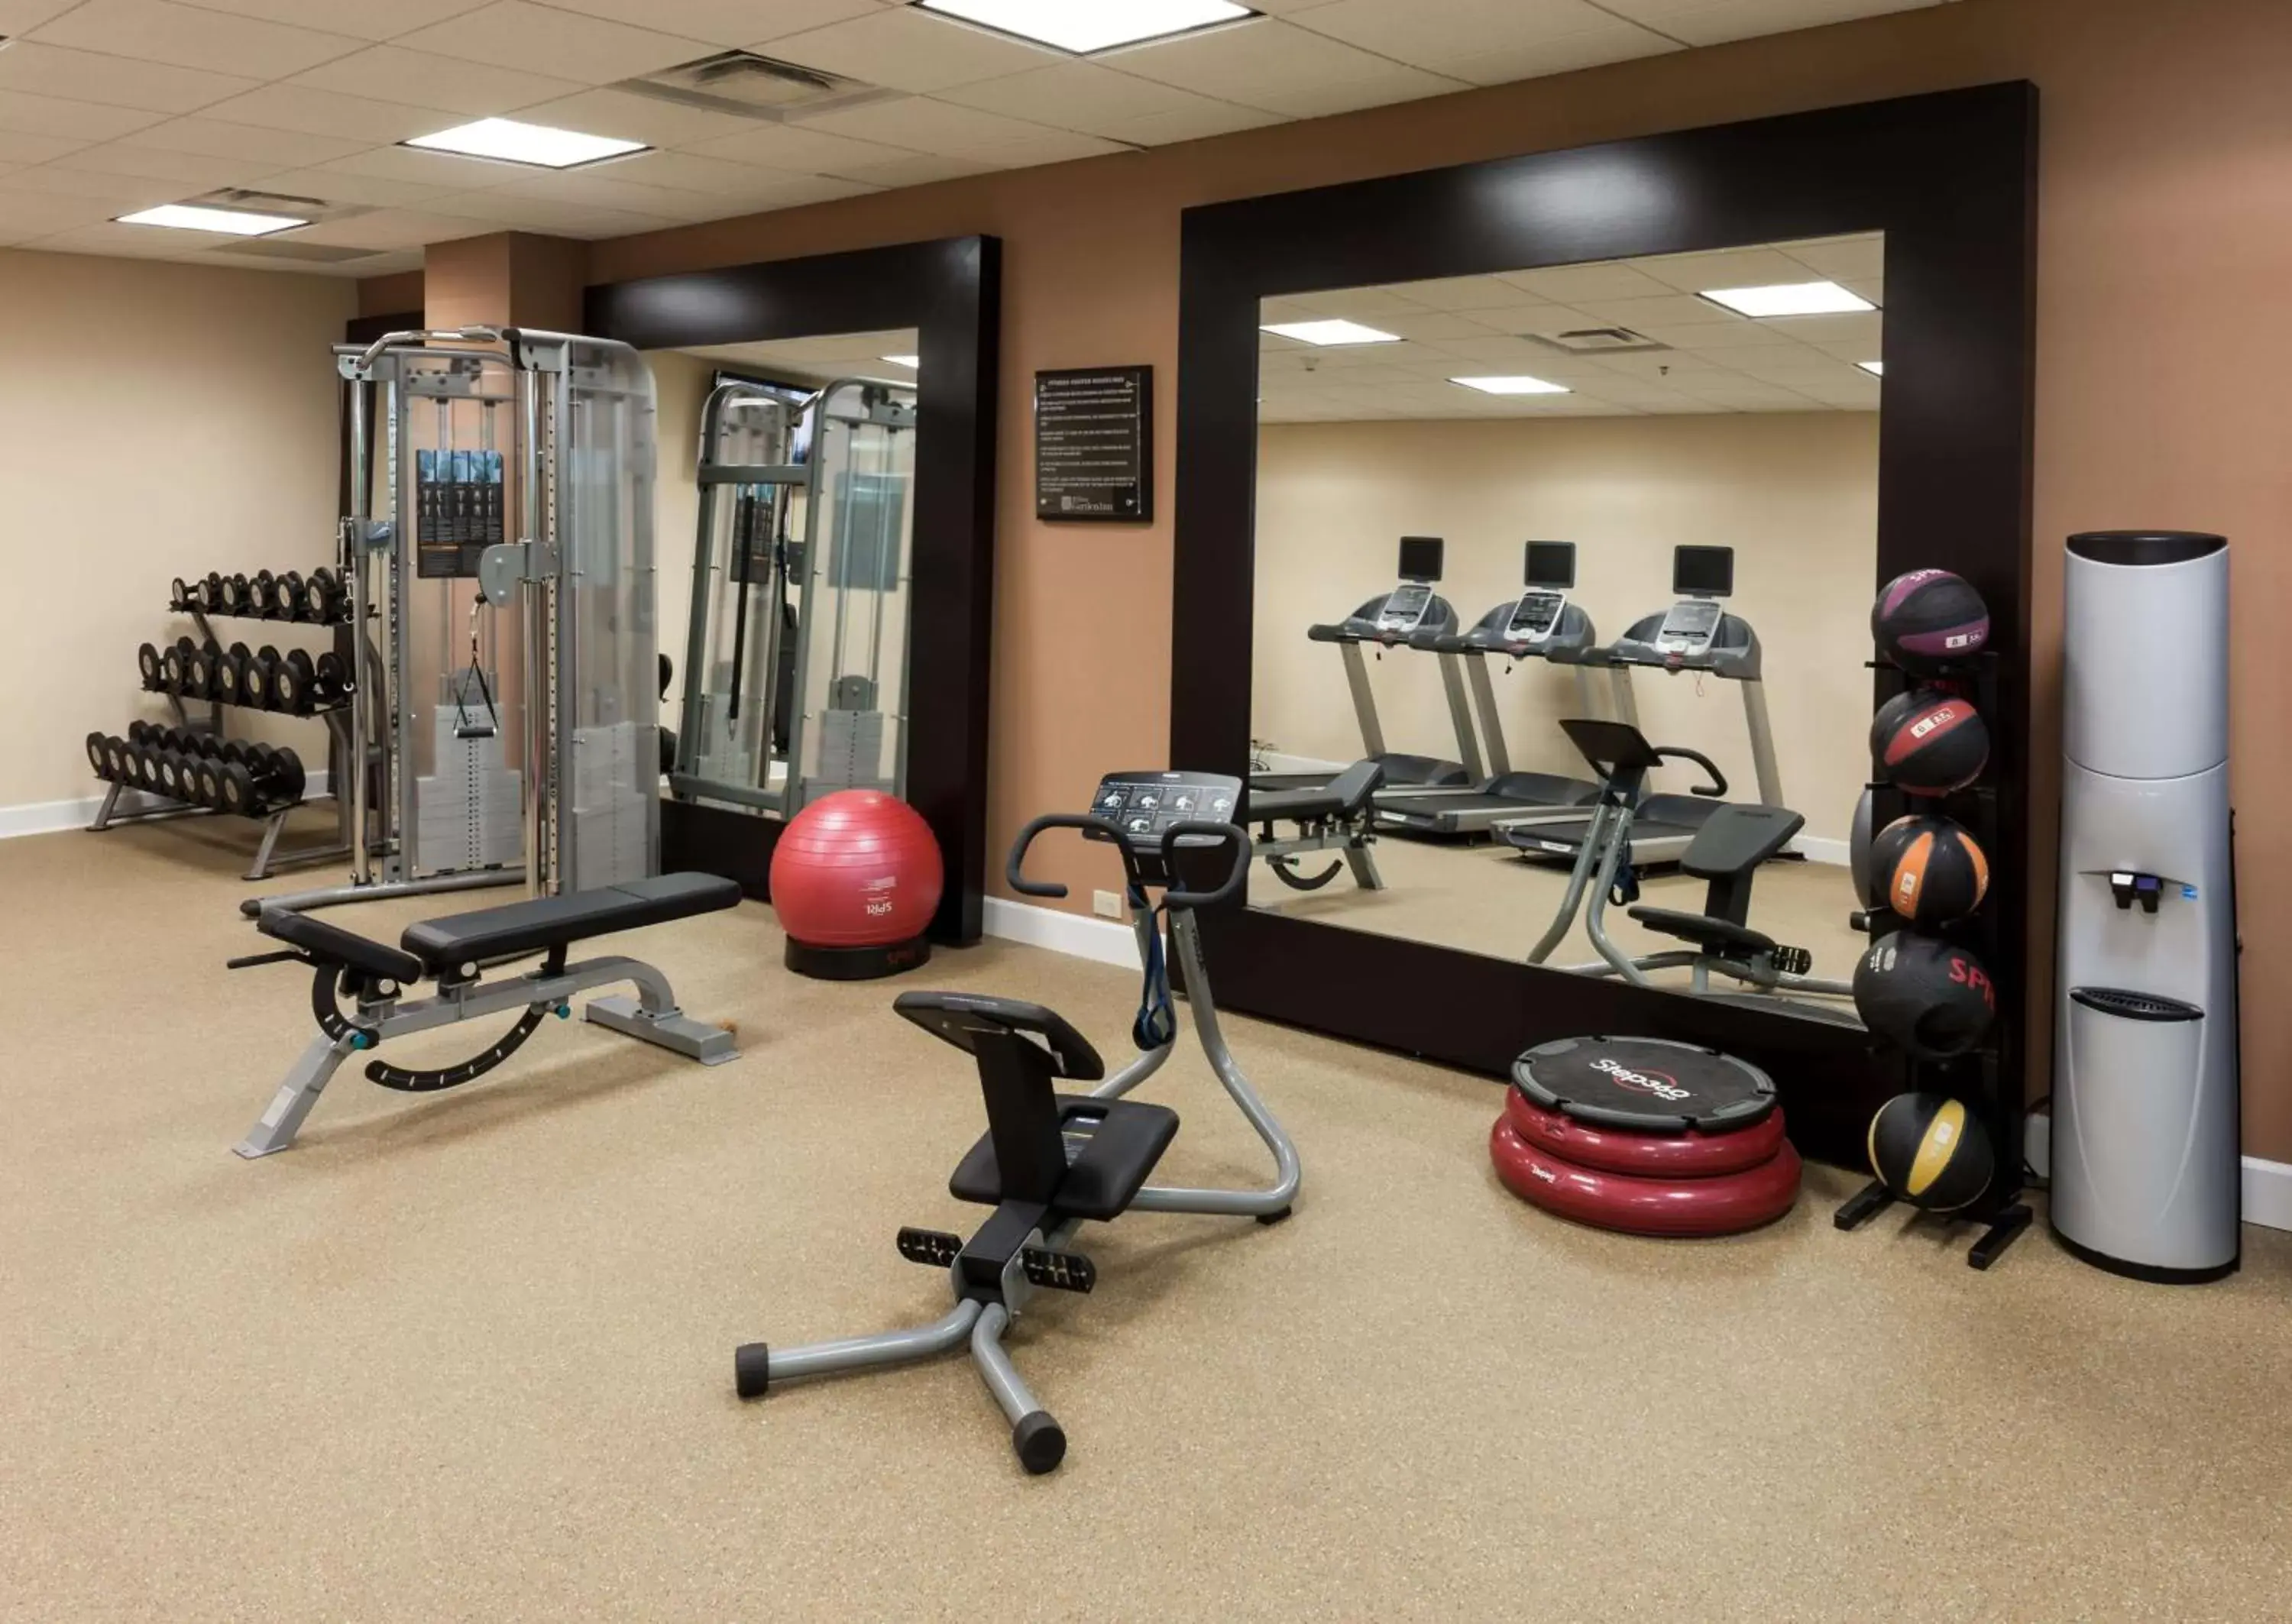 Fitness centre/facilities, Fitness Center/Facilities in Hilton Garden Inn Denver Downtown